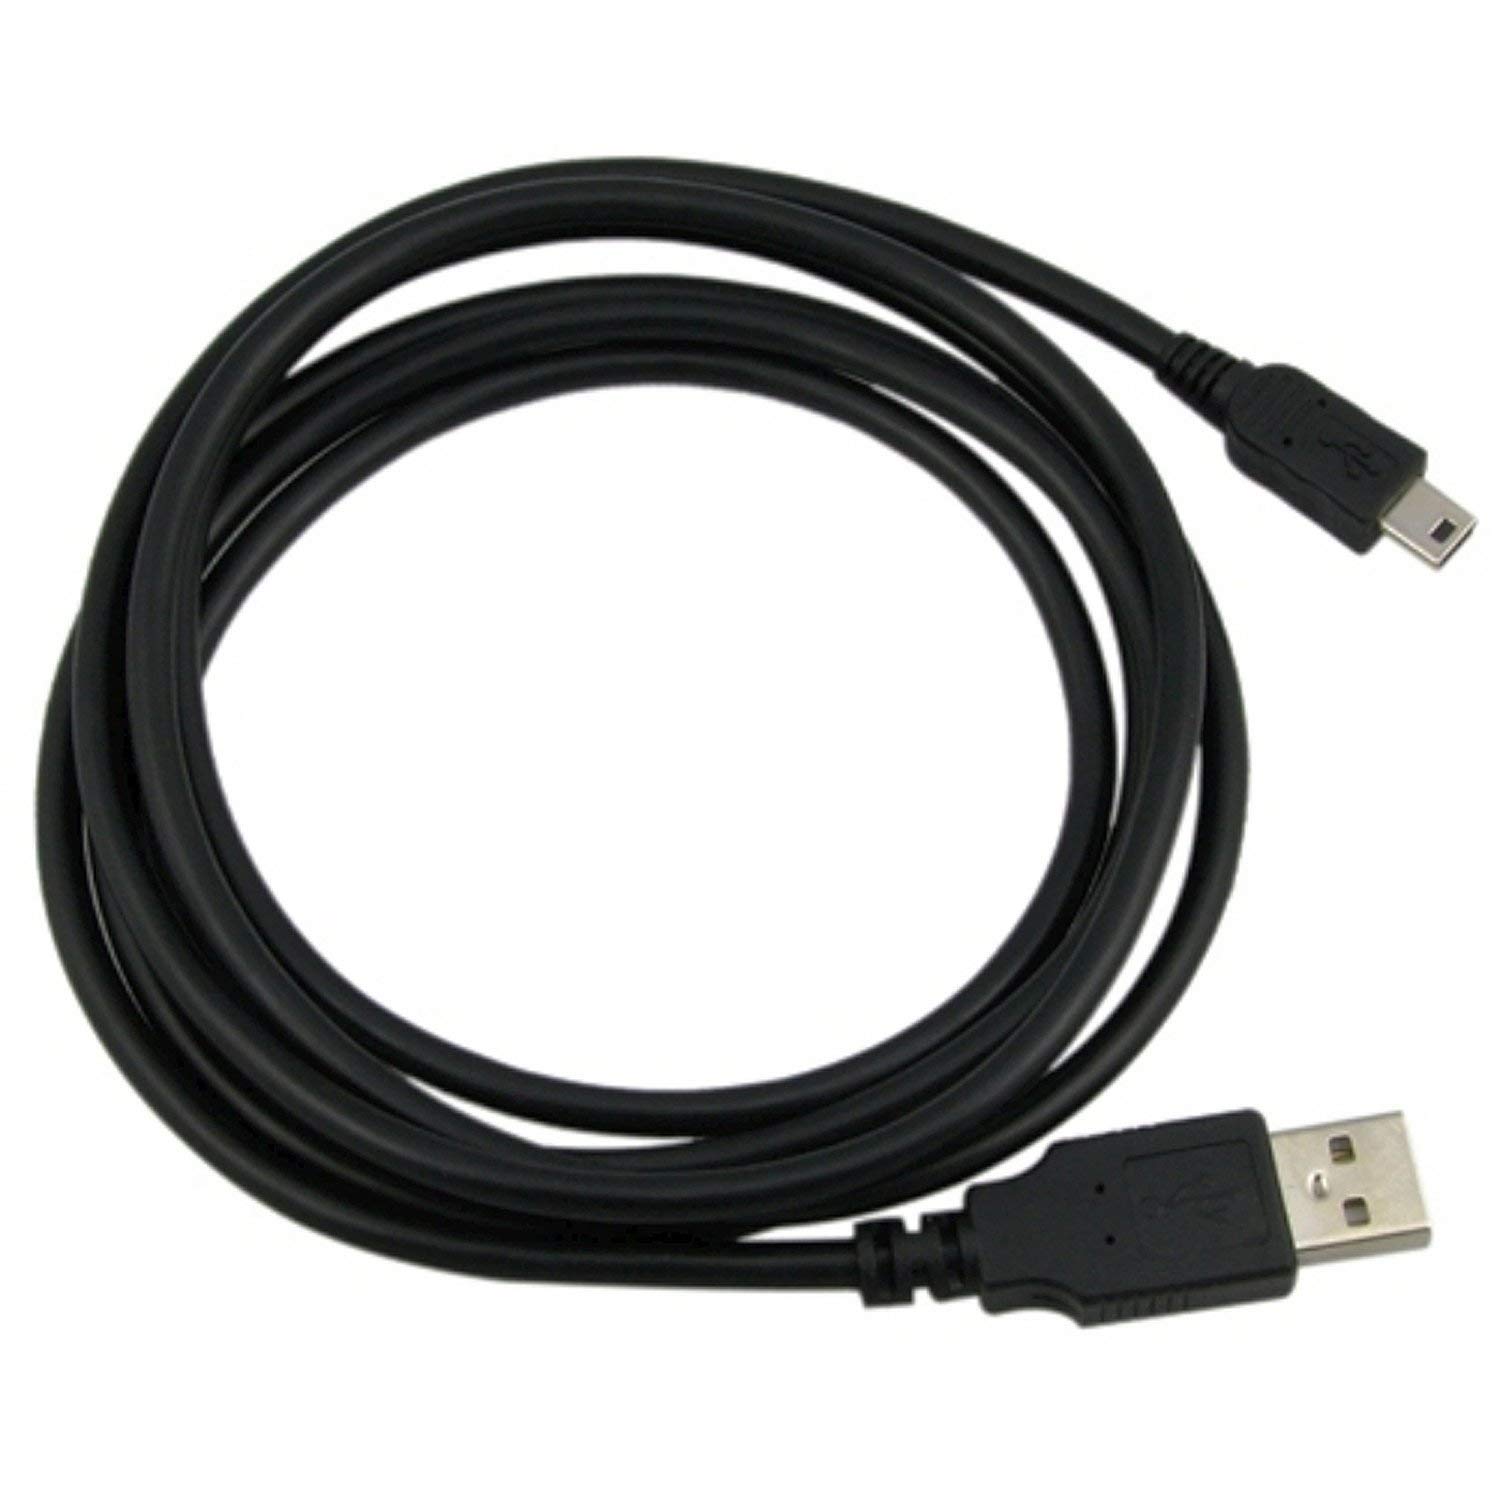 BestCH 3ft USB Data PC Cable Cord For Elmo Elm0 MO-1 M0-1 1337-1 13371 1337-2 13372 1337-3 13373 1337-164 1337164 MO-1W M0-1W 1336-12 133612 Document Camera Visual Presenter